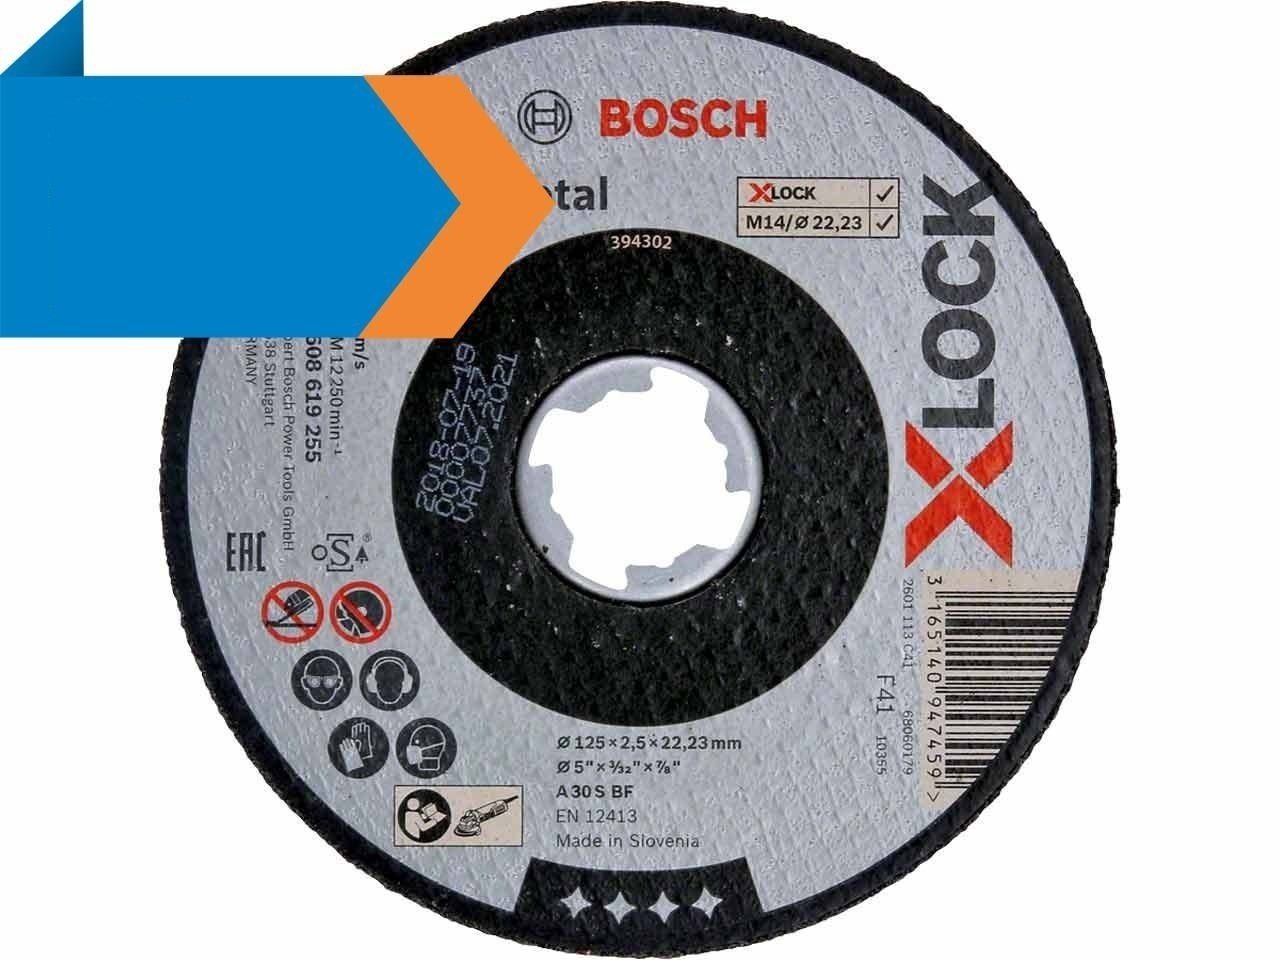 Bosch X-Lock 115 mm Expert Inox Rapipdo